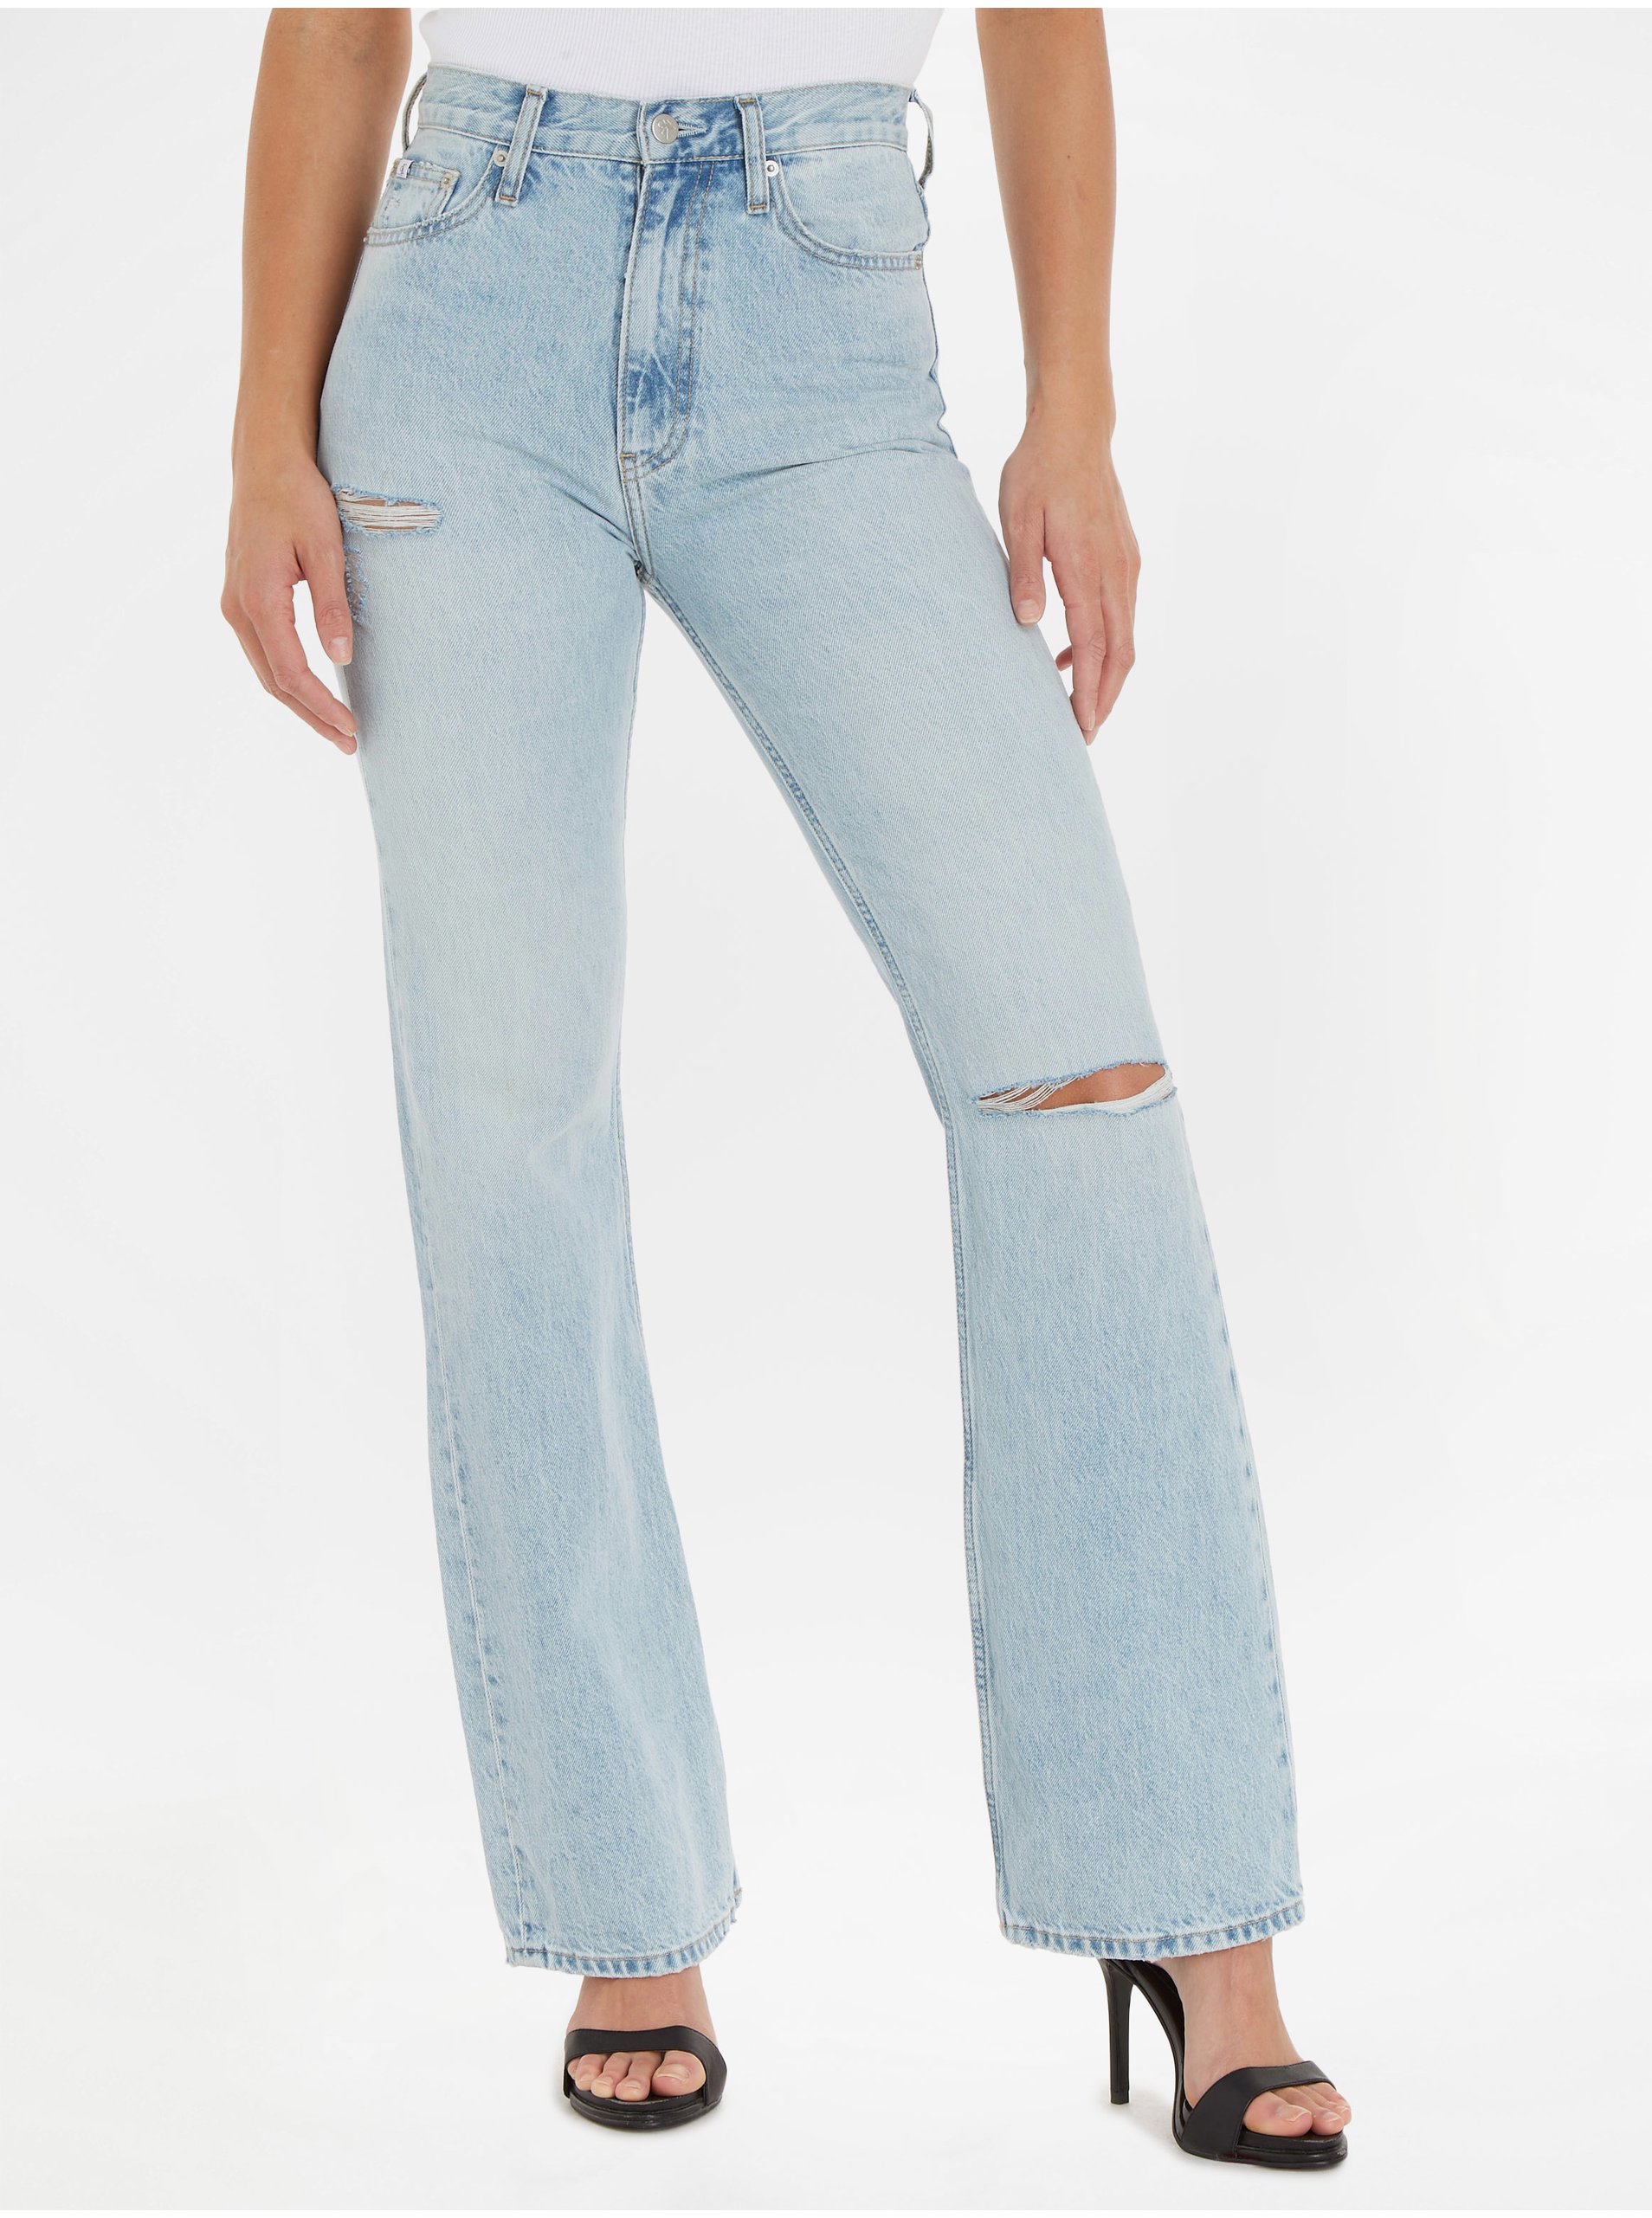 Lacno Svetlomodré dámske bootcut džínsy Calvin Klein Jeans